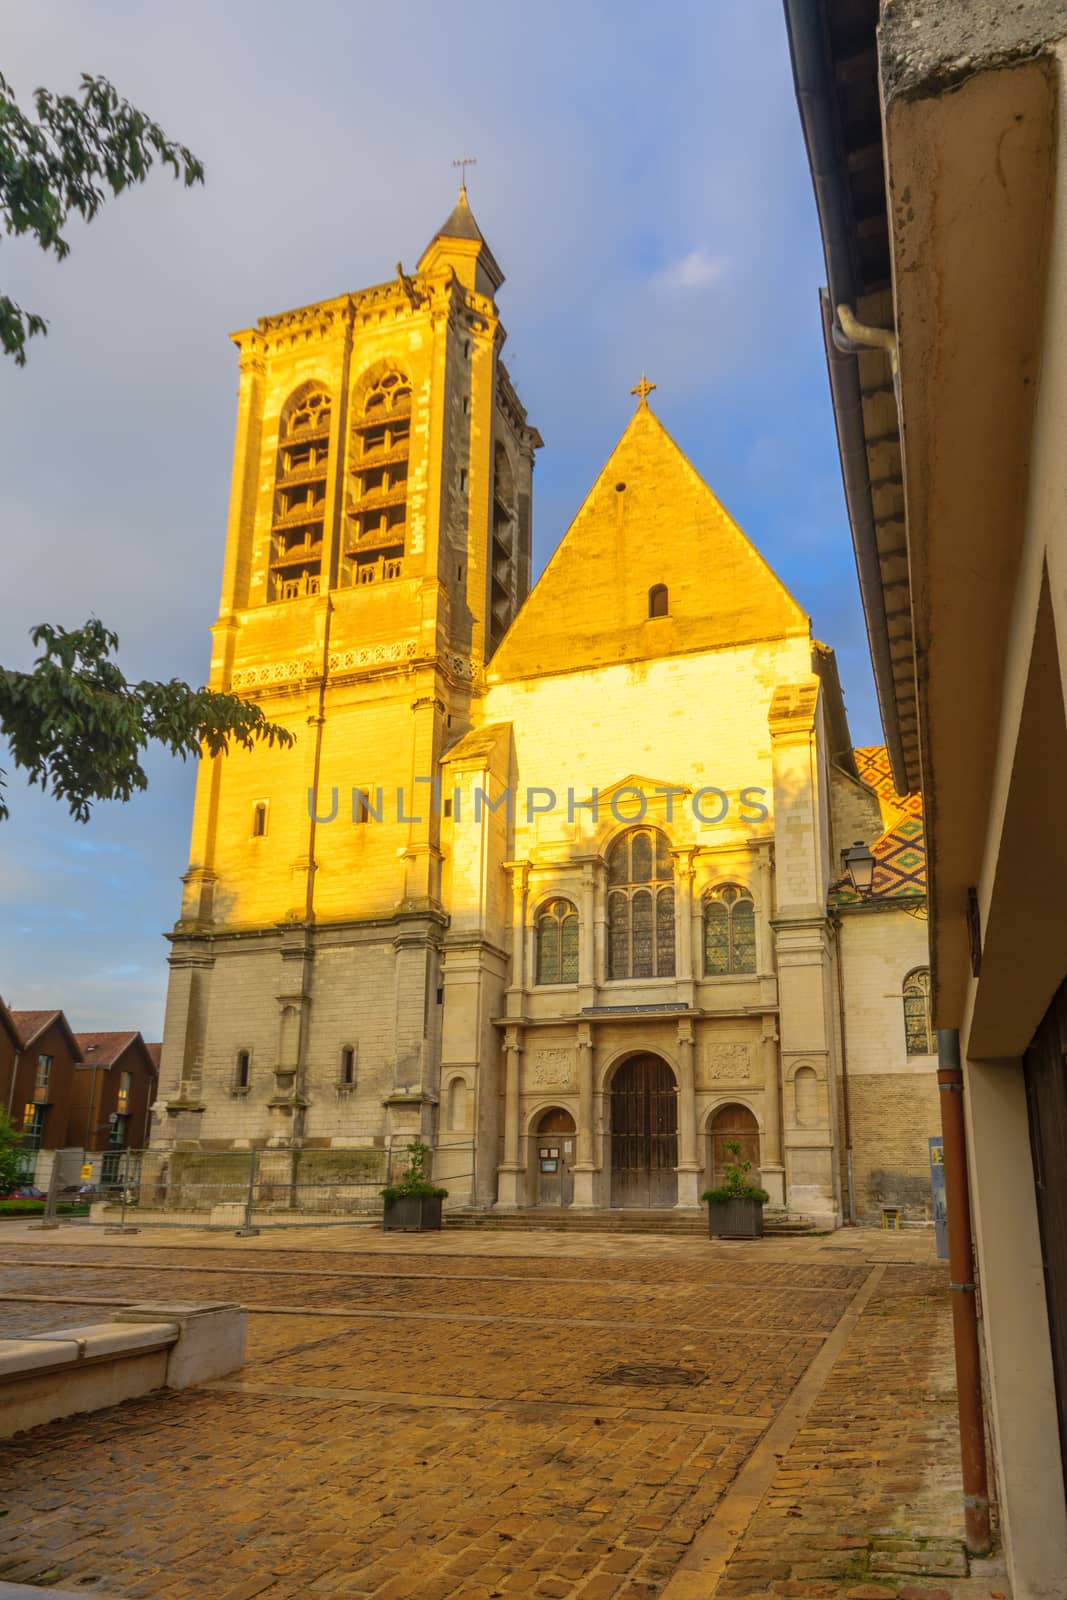 Saint-Nizier church, in Troyes by RnDmS